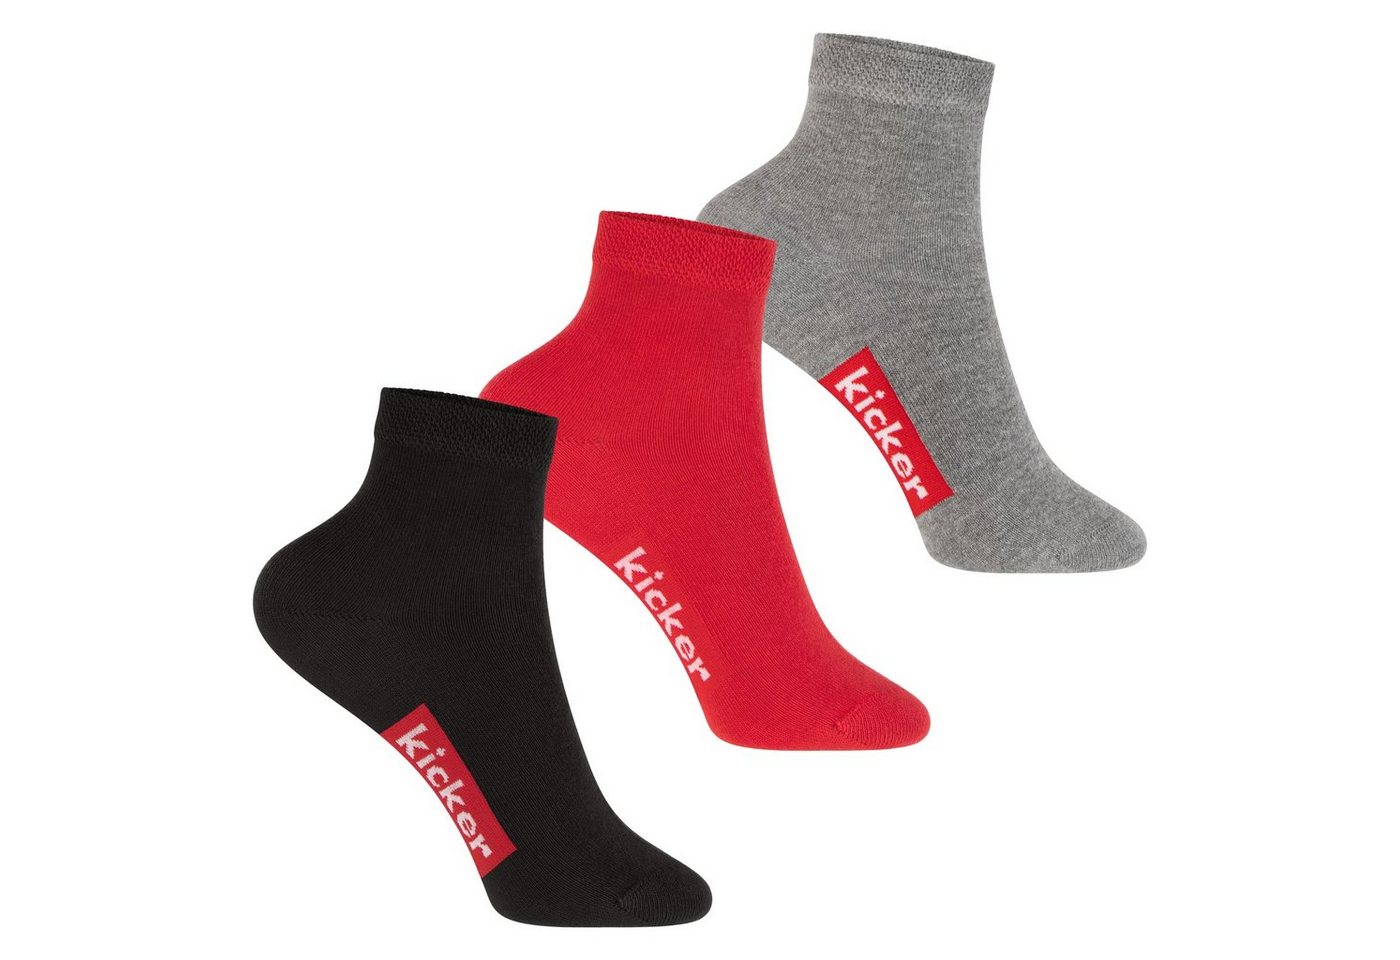 Kicker Füßlinge kicker Kinder Kurzschaft Socken (3 Paar) Schwarz Rot Grau 31-34 von Kicker